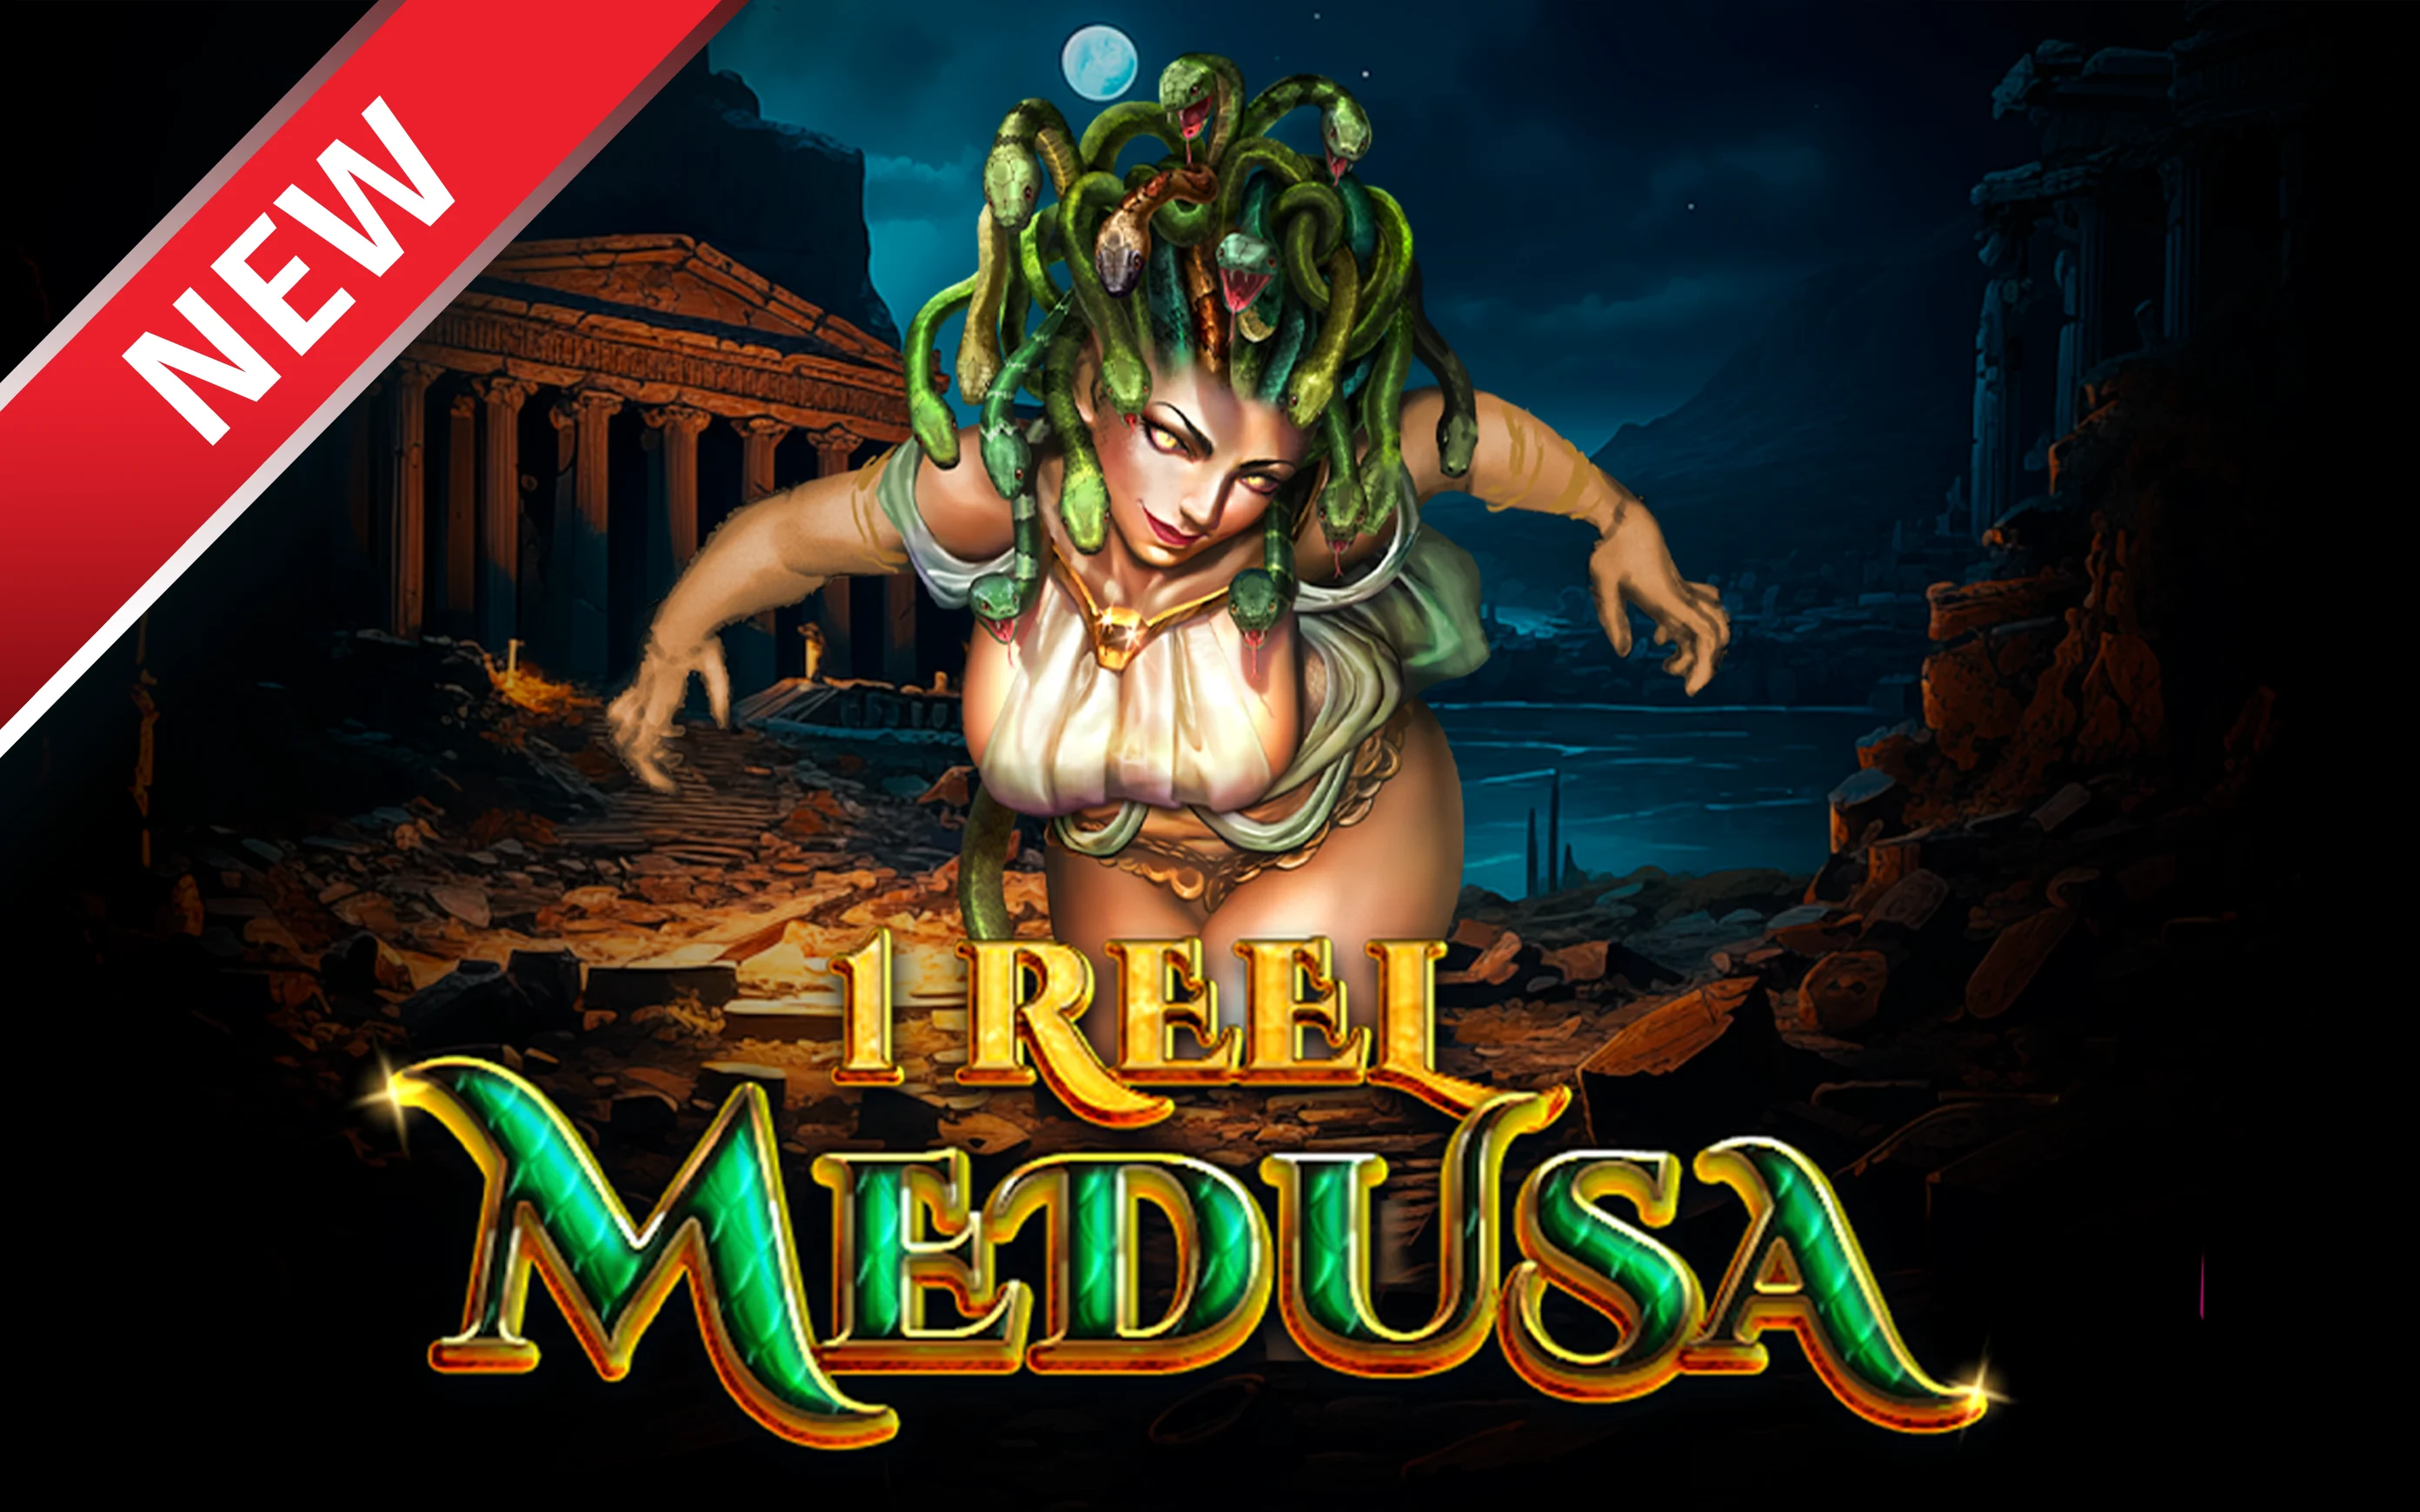 Play 1 Reel - Medusa™ on Starcasino.be online casino